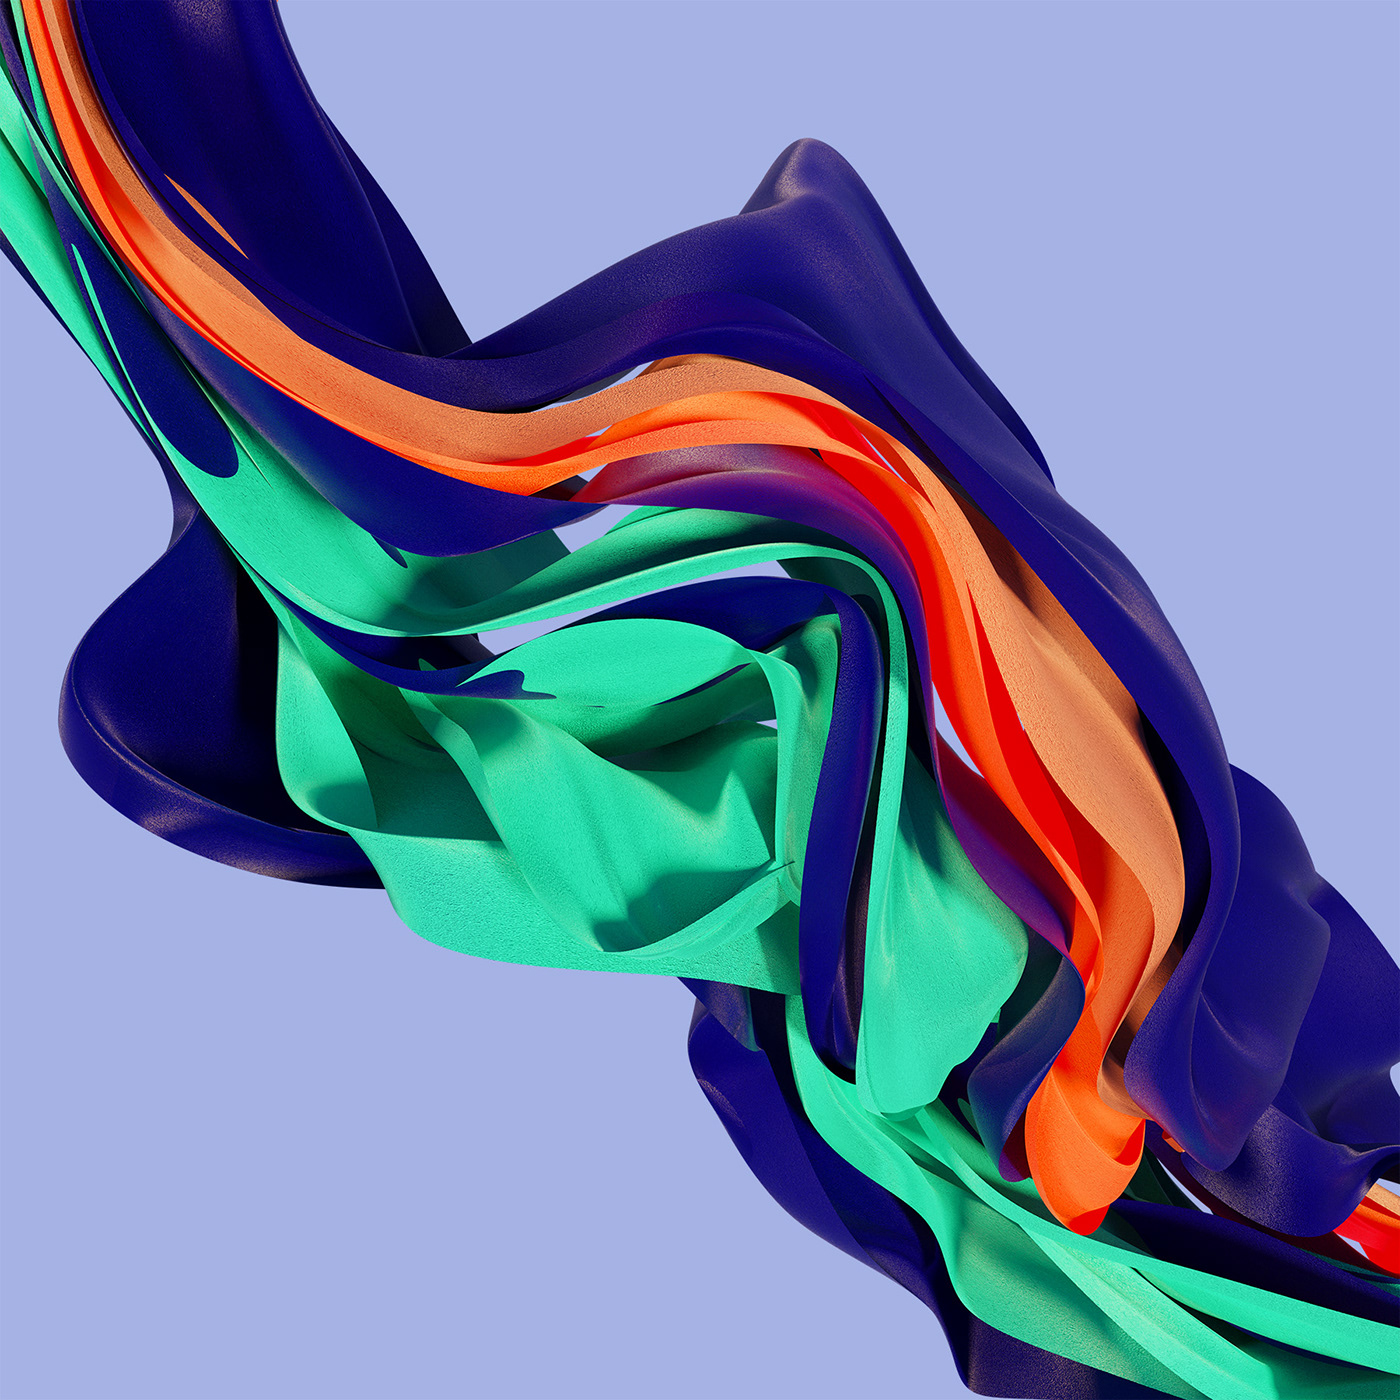 3D modern Render effects simulation wallpaper abstract Wallpapers designer CGI